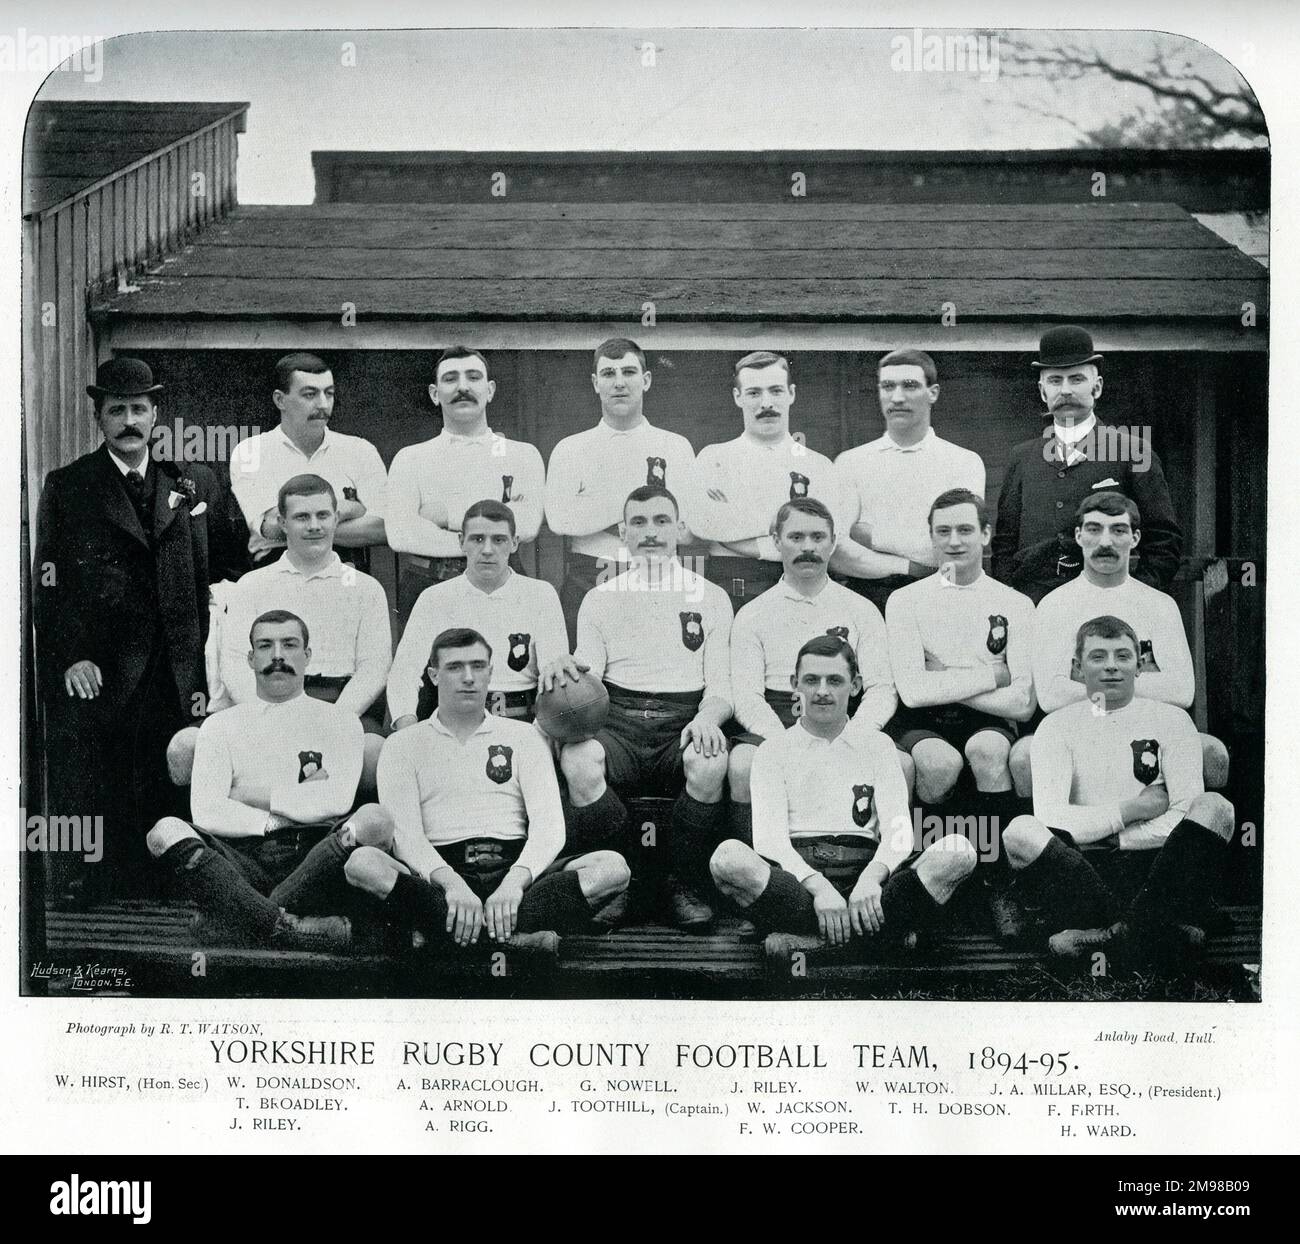 Yorkshire Rugby County Football Team, 1894-95: Hirst (Hon Sec), Donaldson, Barraclough, Nowell, Riley, Walton, Millar (Präsident), Broadley, Arnold, Toothill (Kapitän), Jackson, Dobson, Firth, Riley, Rigg, Cooper, Ward. Stockfoto